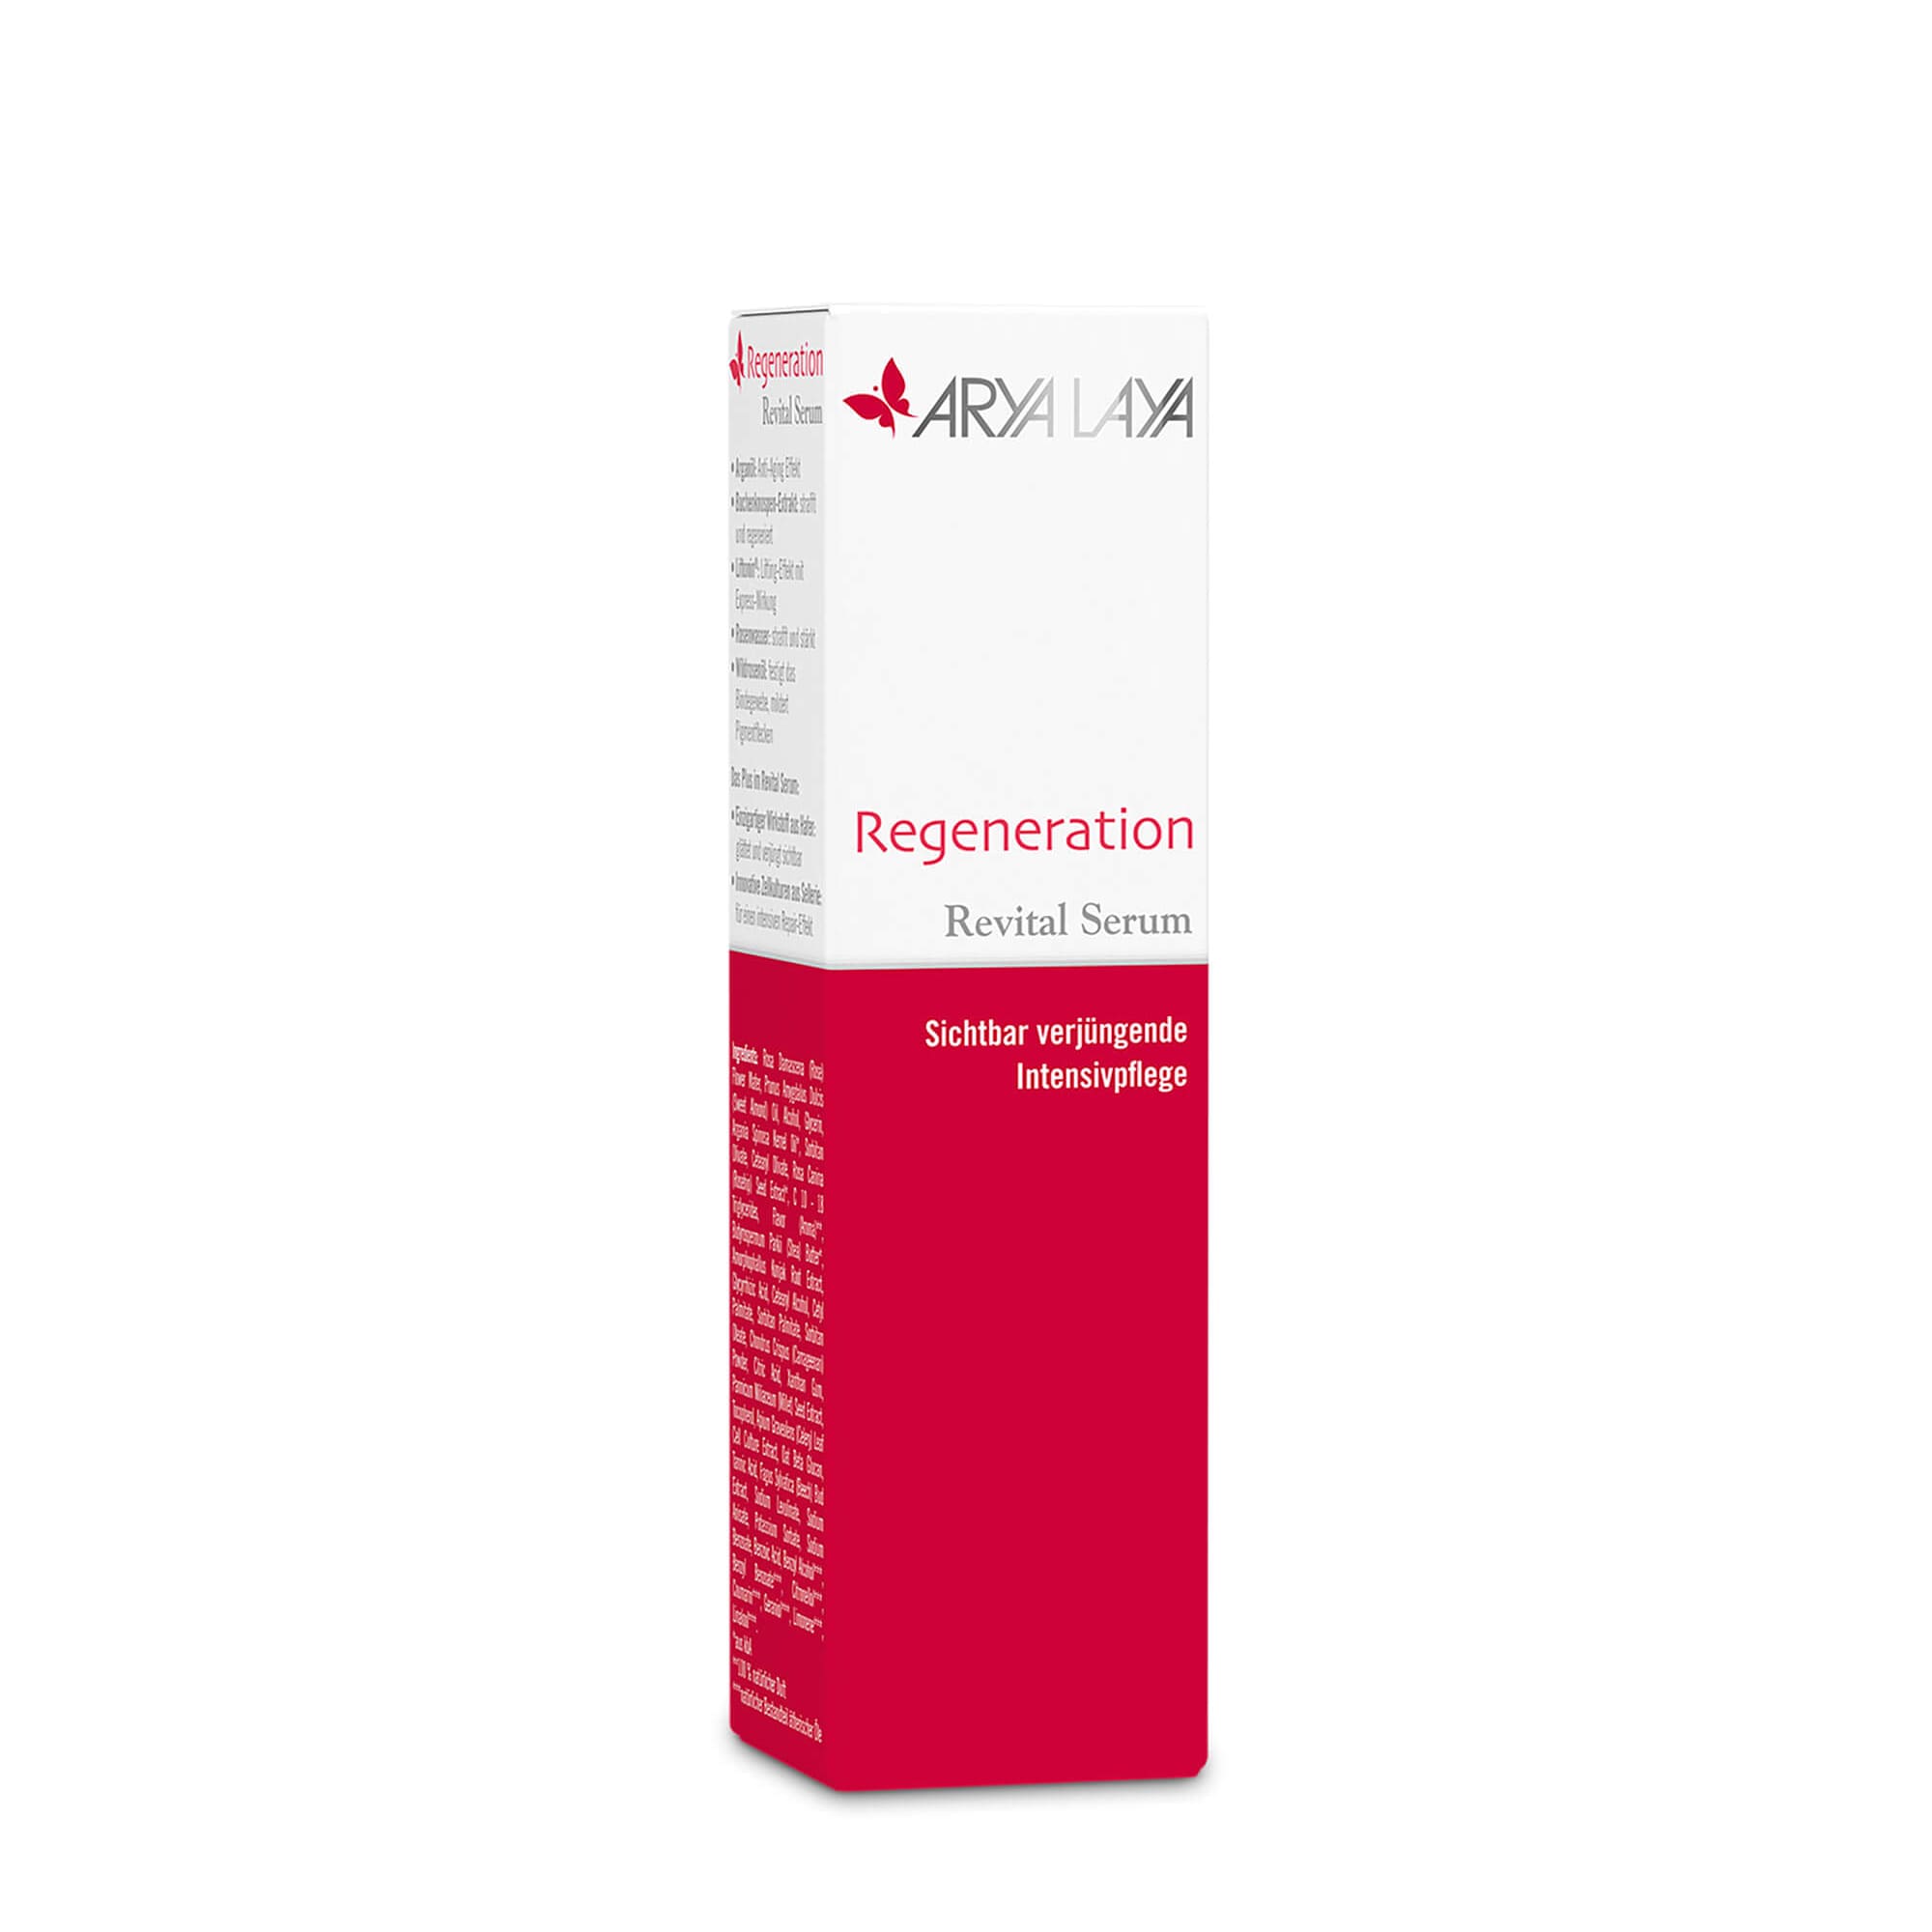 Faltschachtel mit ARYA LAYA Regeneration Revital Serum, 30 ml